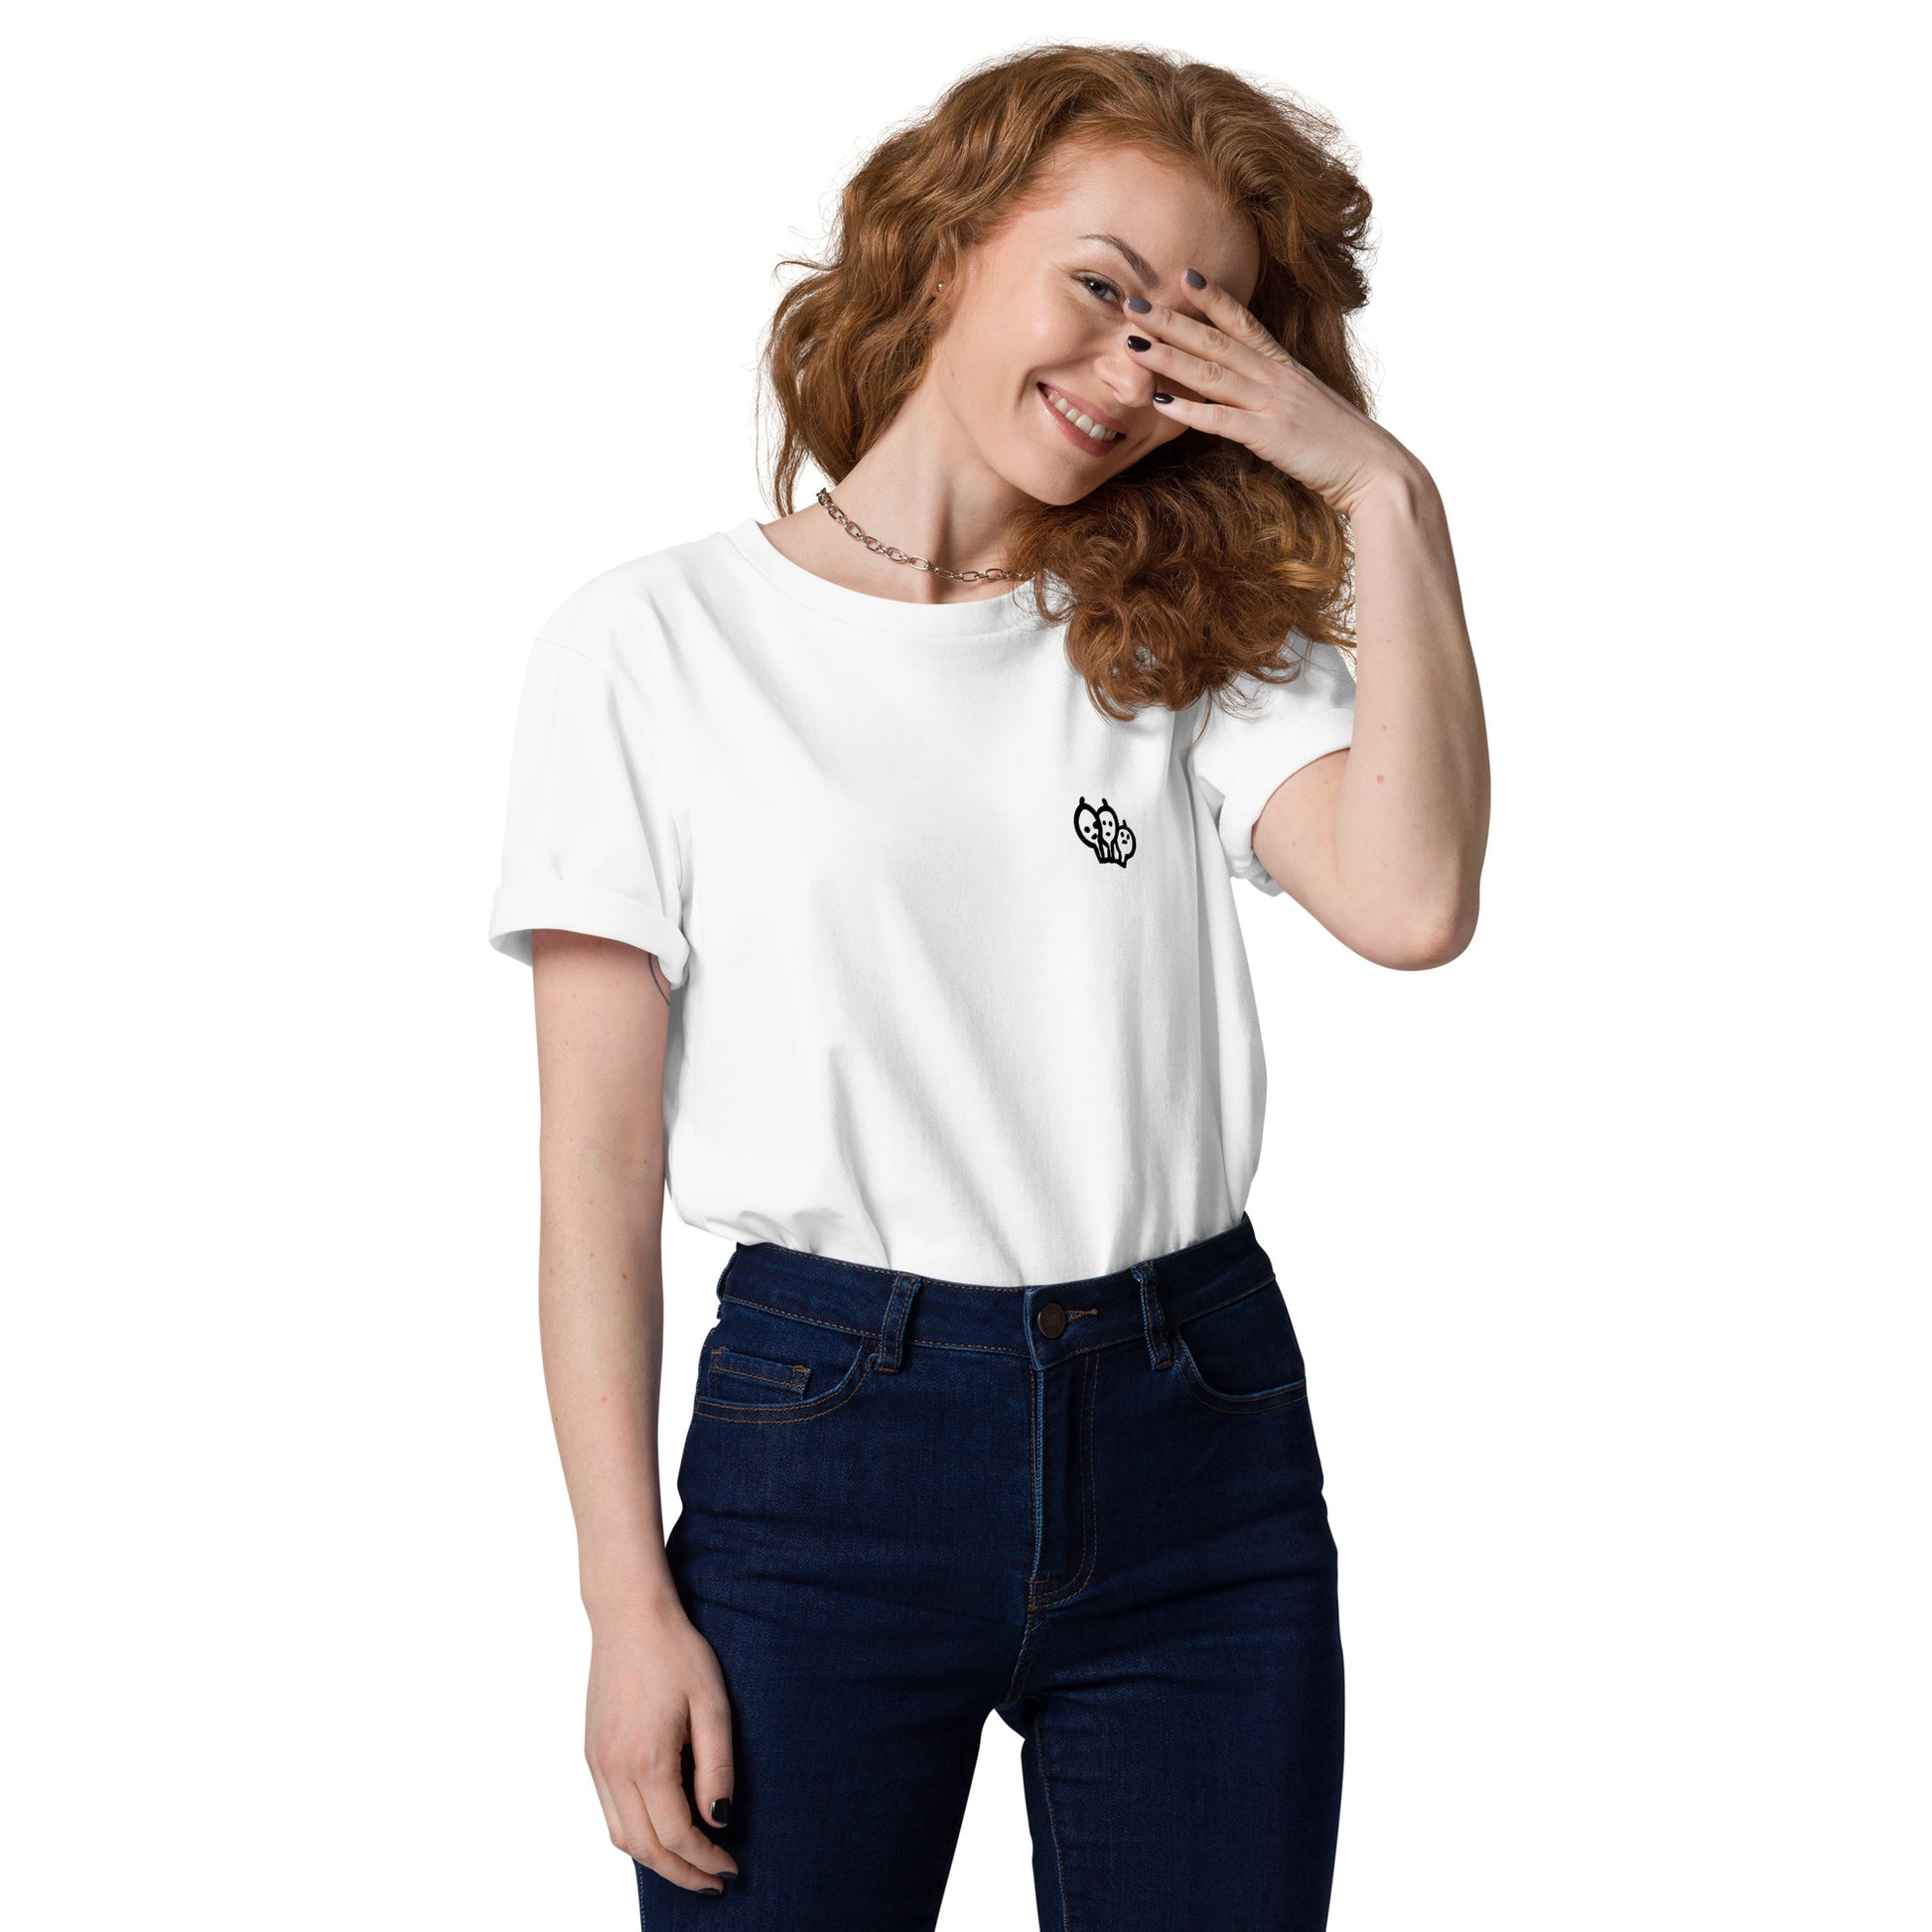 Girl's NASA Dusk Logo T-Shirt - White - Medium